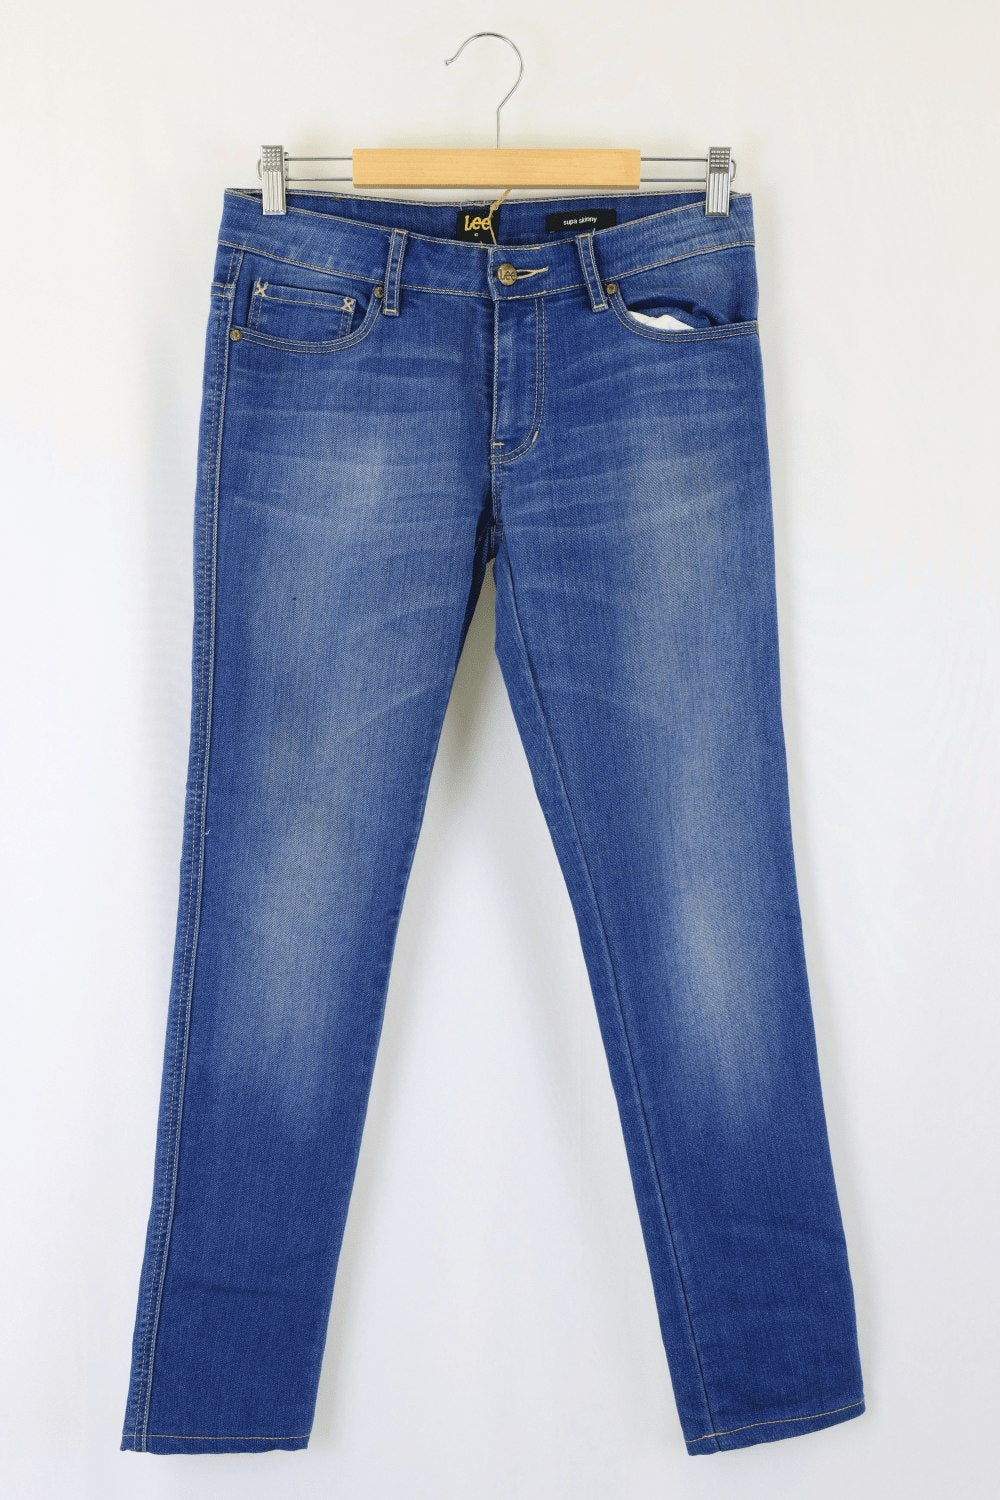 Lee Blue Jeans 10